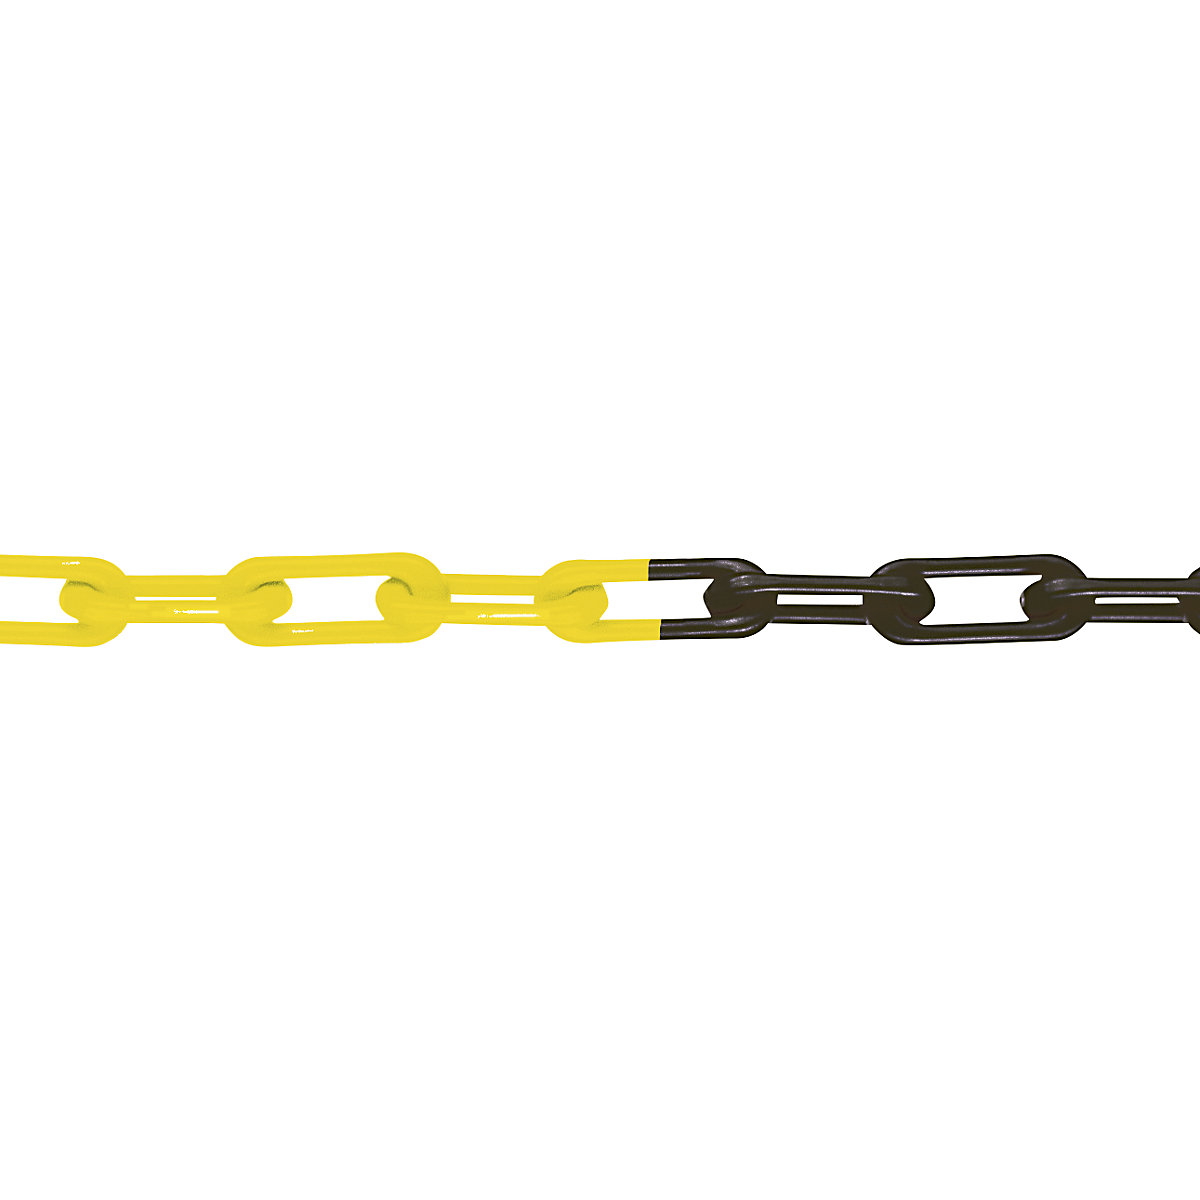 Nylon-kwaliteitsketting, MNK-kwaliteit 6, lengte 50 m, zwart-geel, vanaf 4 stuks-5